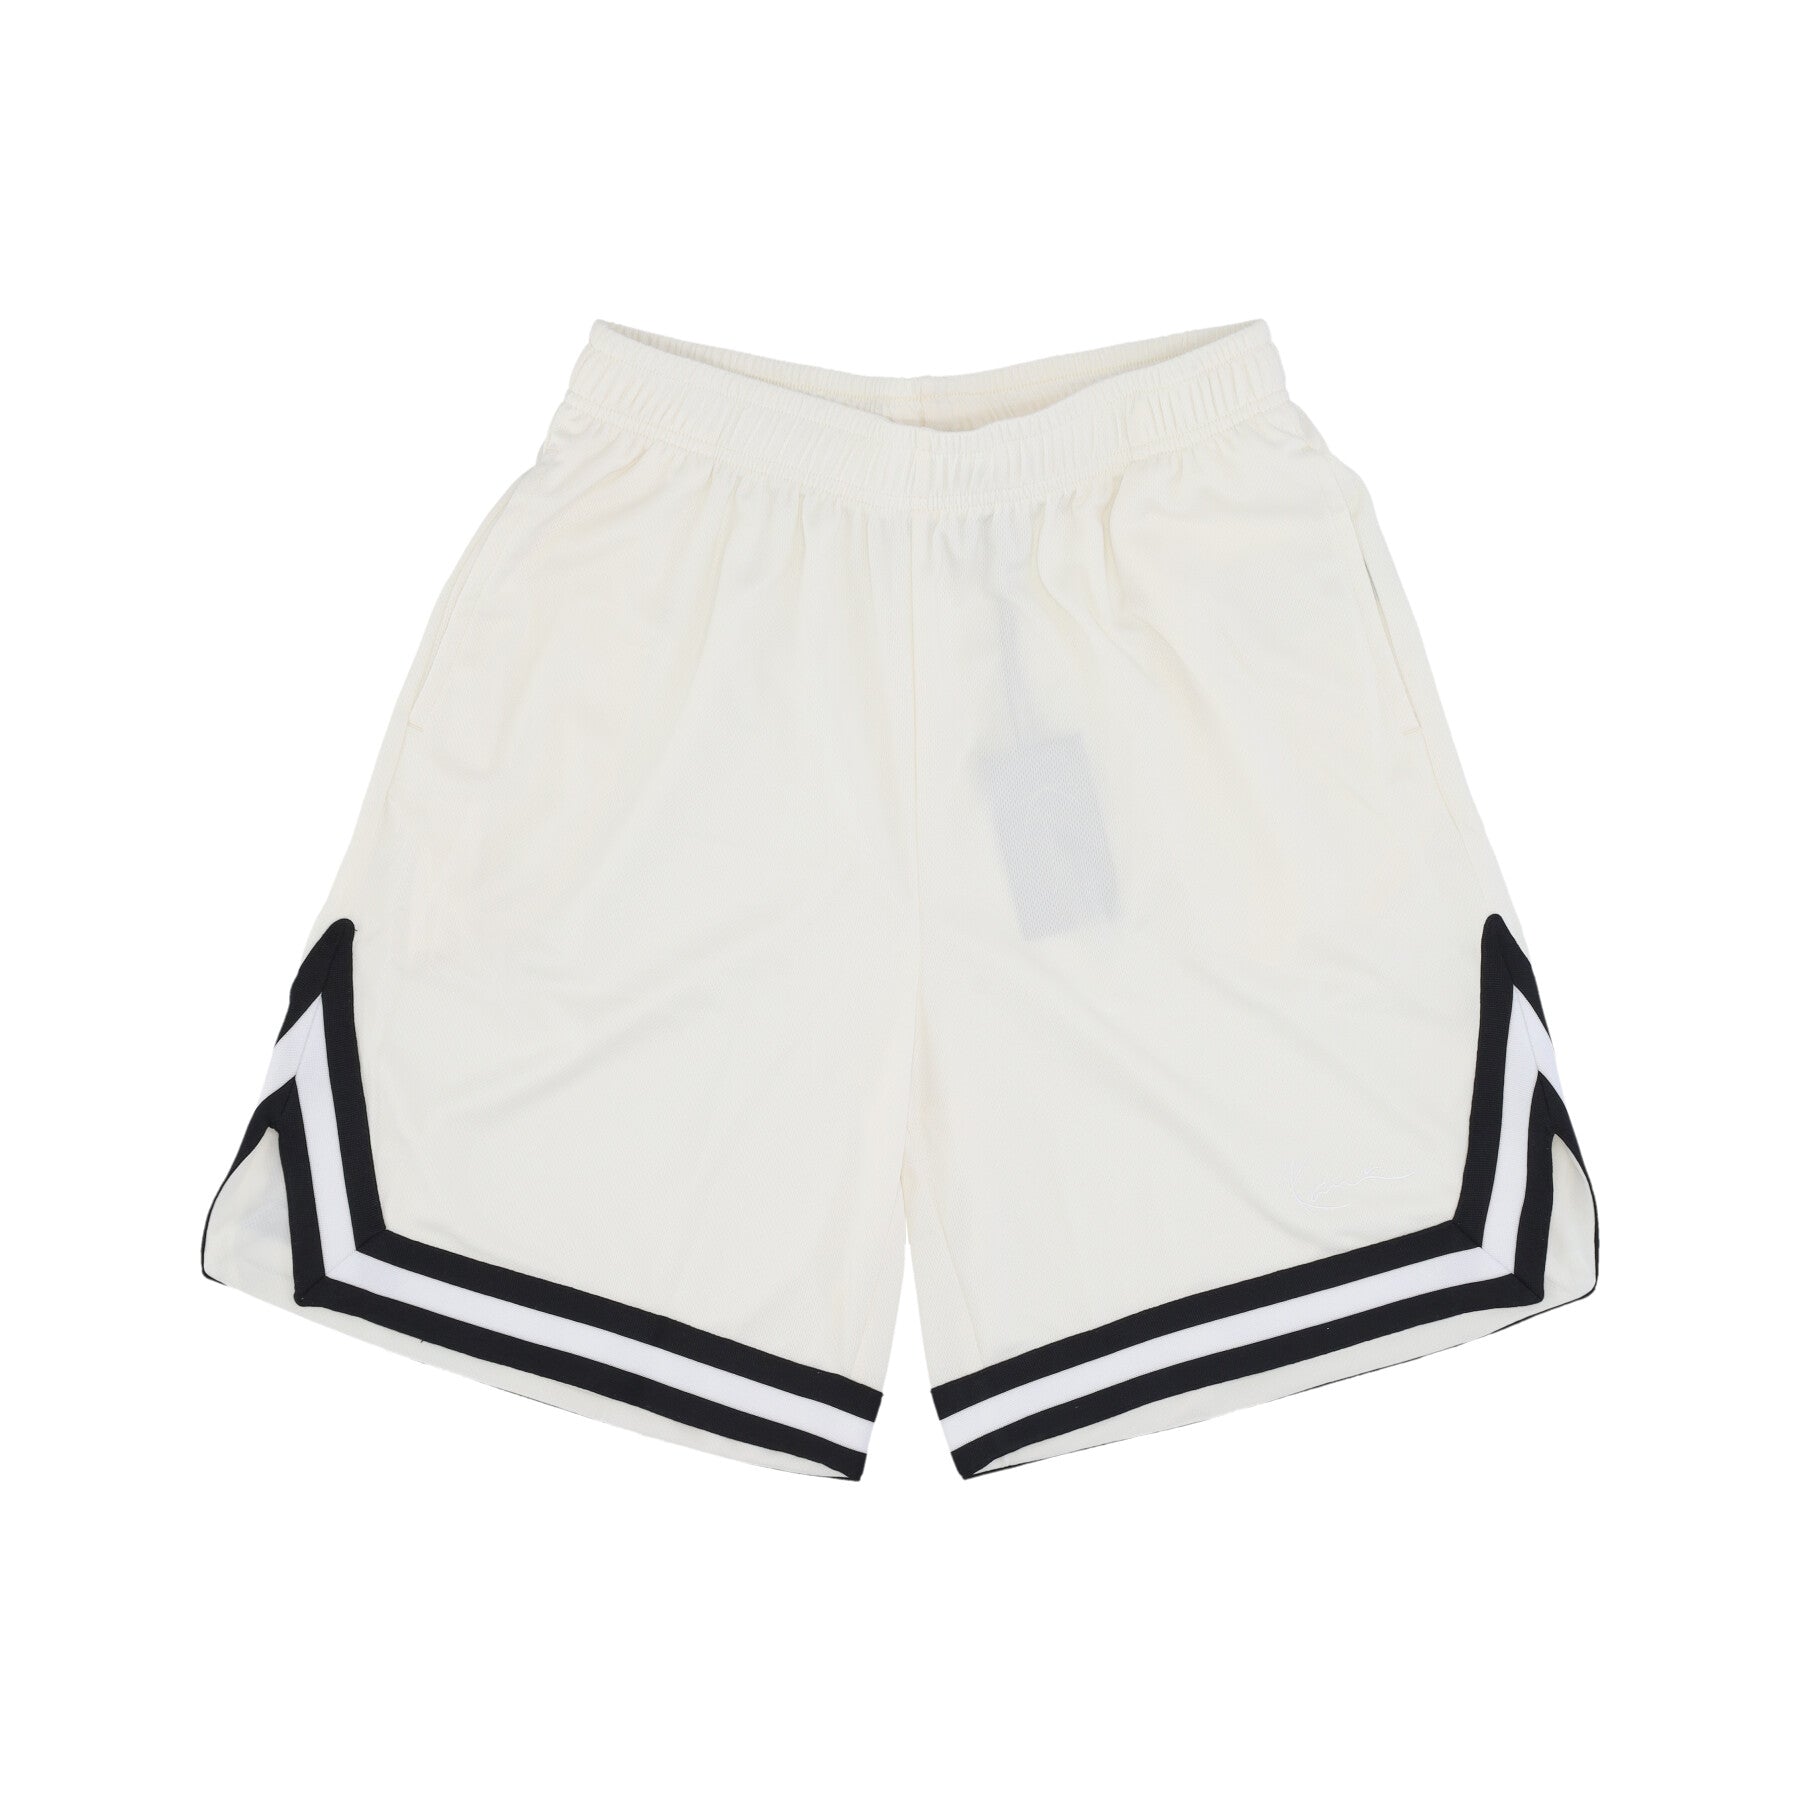 Pantaloncino Tipo Basket Uomo Essential Mesh Shorts Off White 6013730